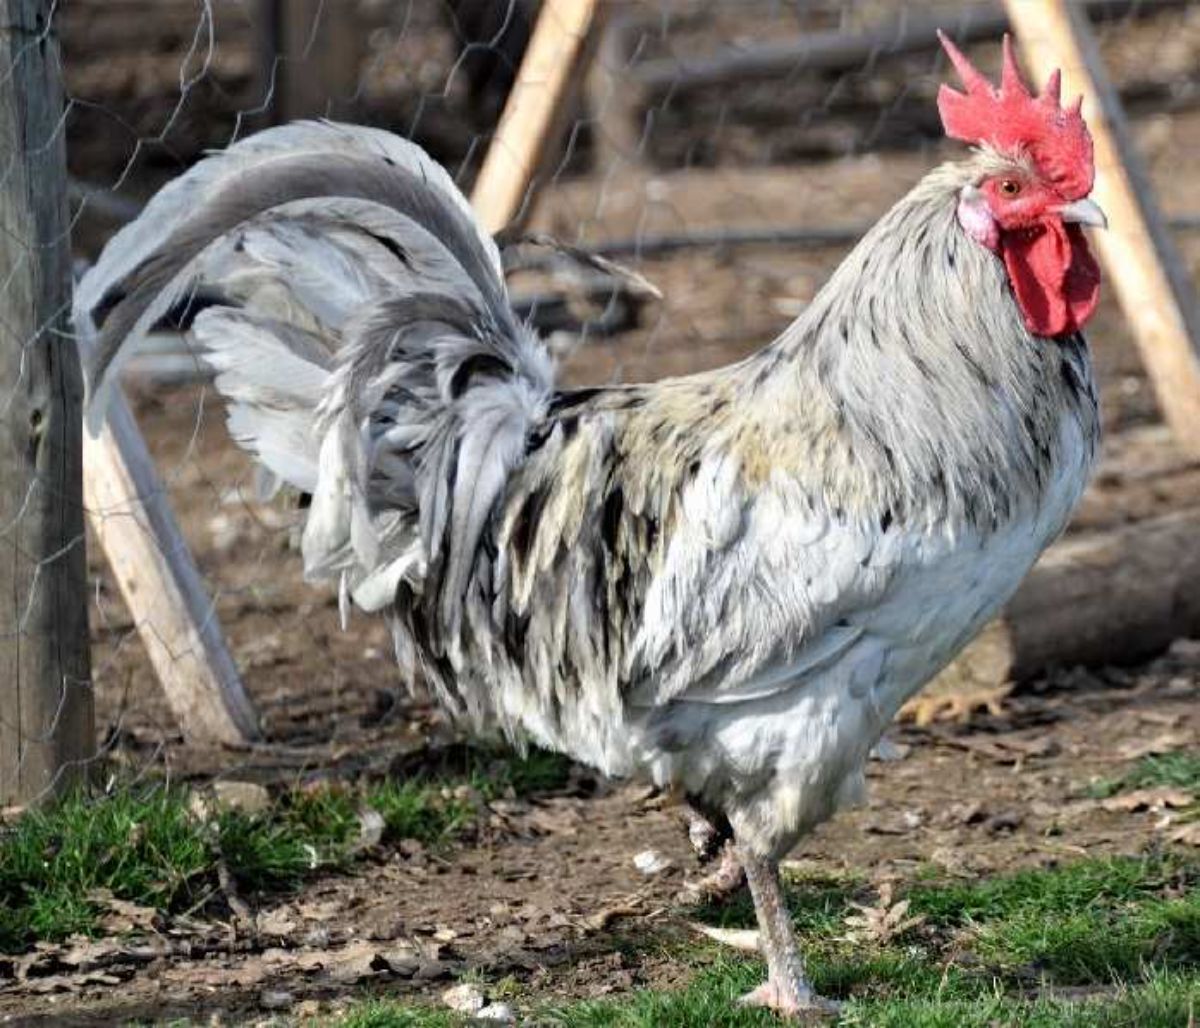 A big, gray Indio de León rooster stands in a backyard.